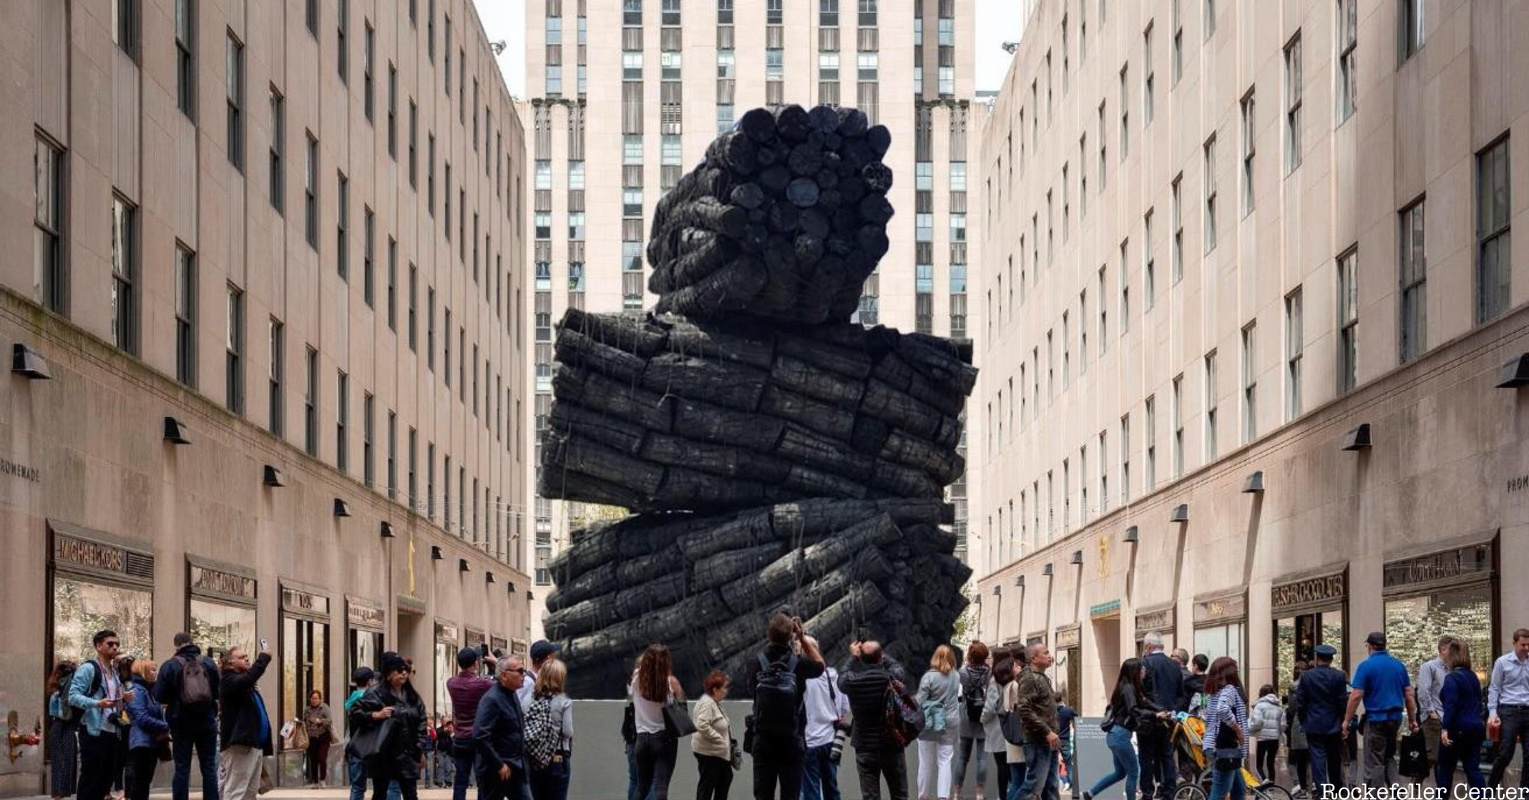 charcoal sculpture in Origin, Emergence, Return at Rockefeller Center